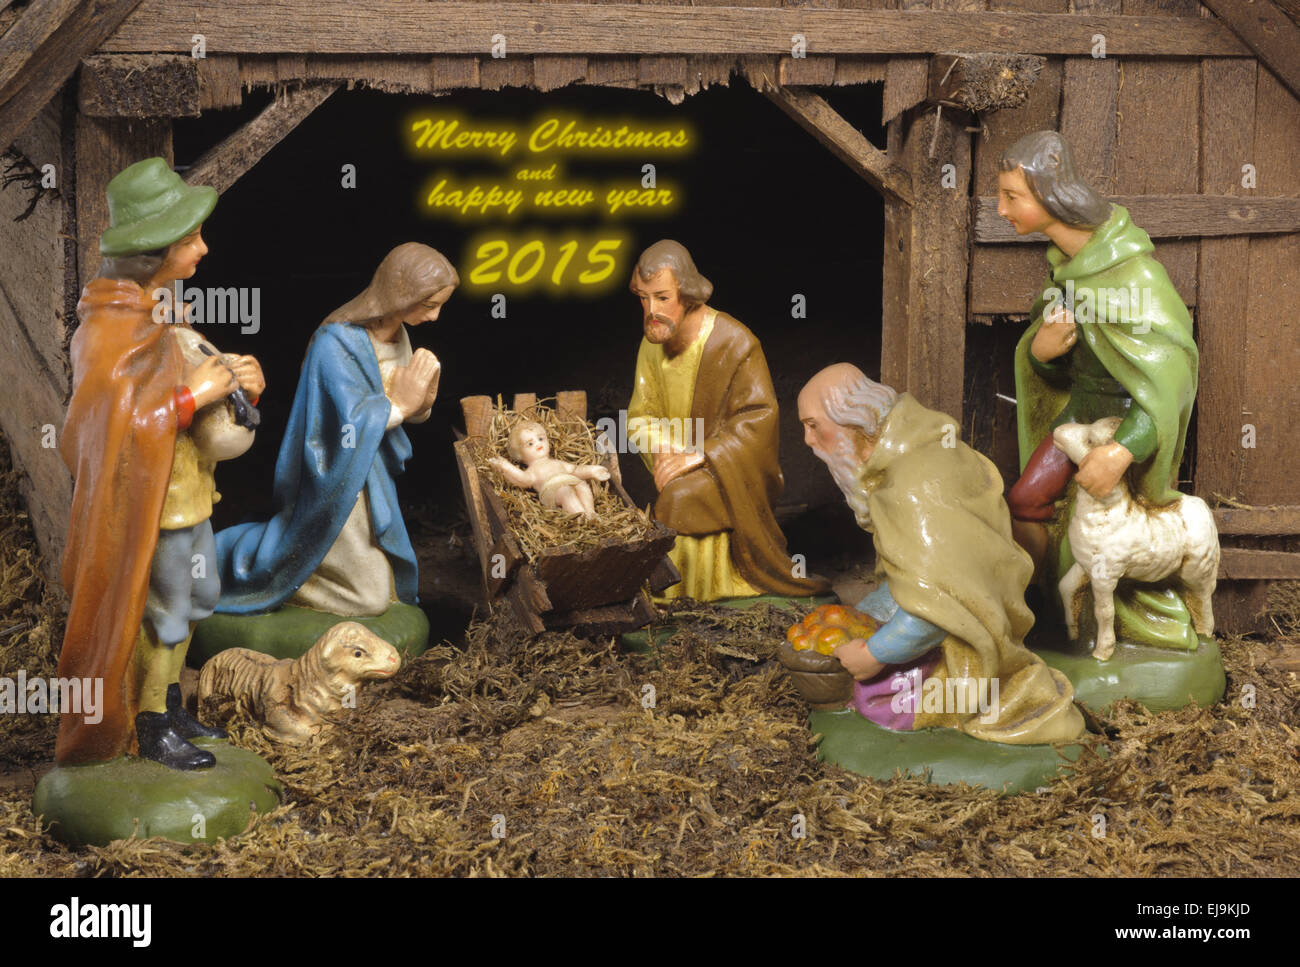 christmas crib and nativity scene for 2015 Stock Image